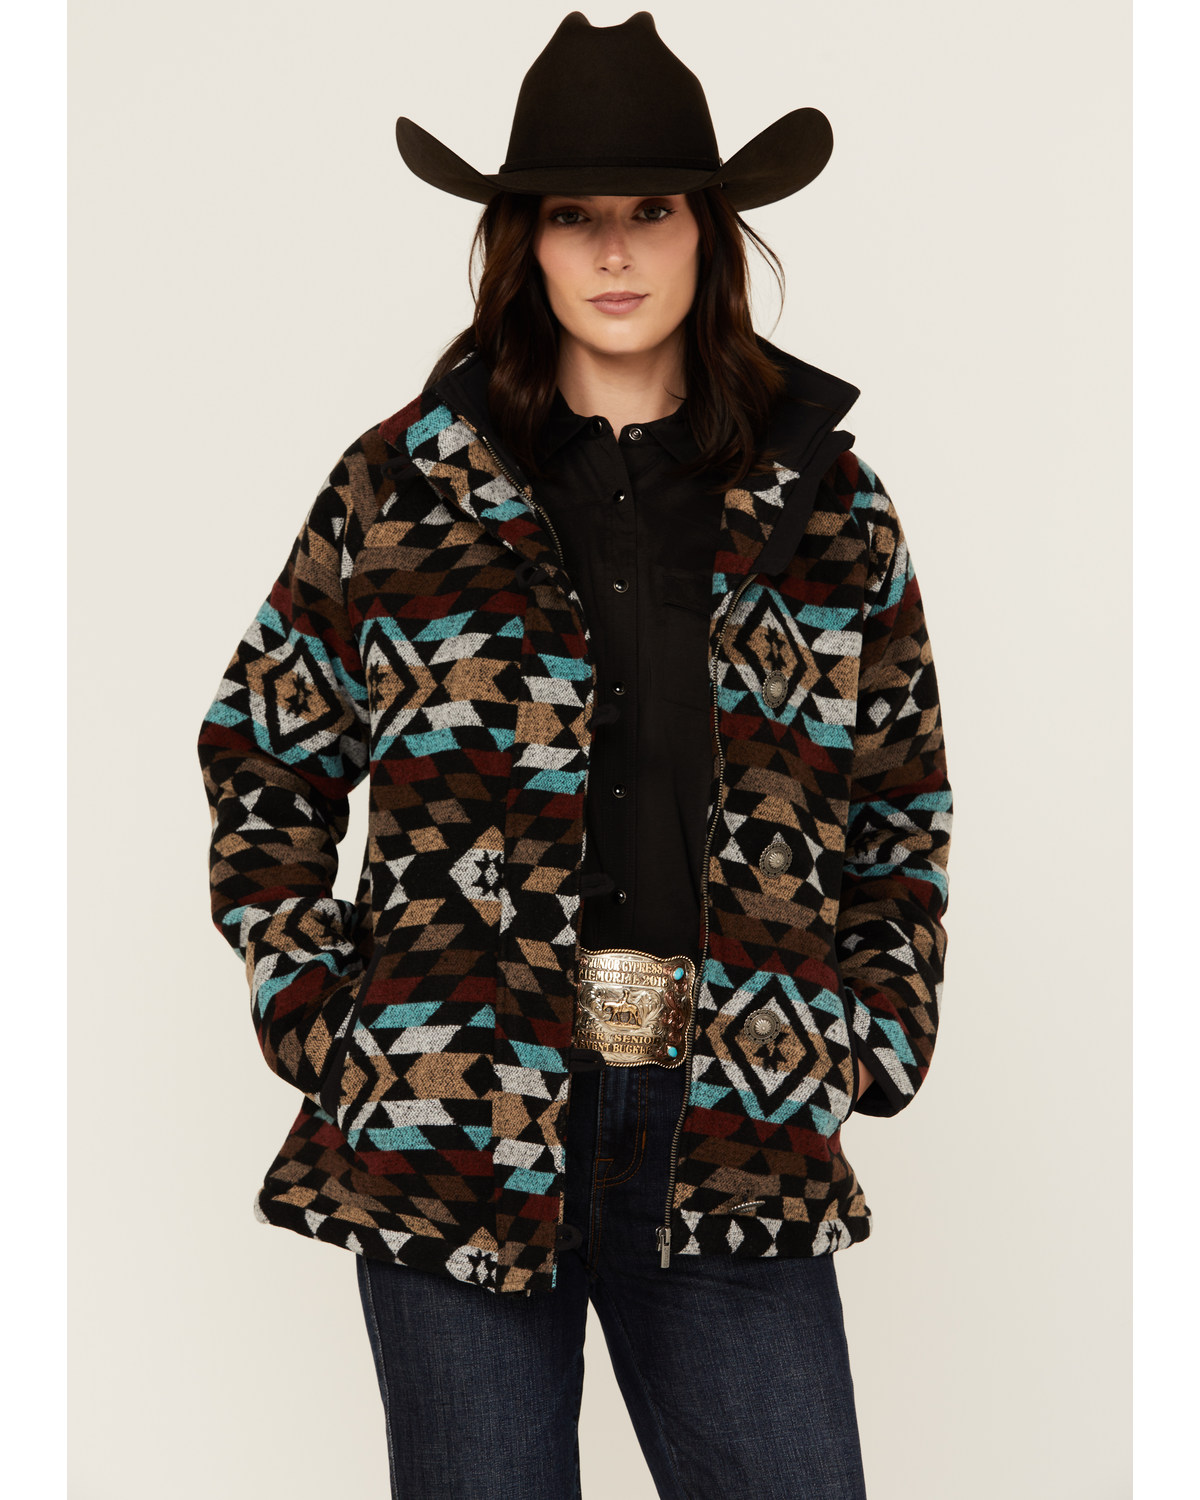 Cruel Girl Women's Southwestern Print Tweed Jacket